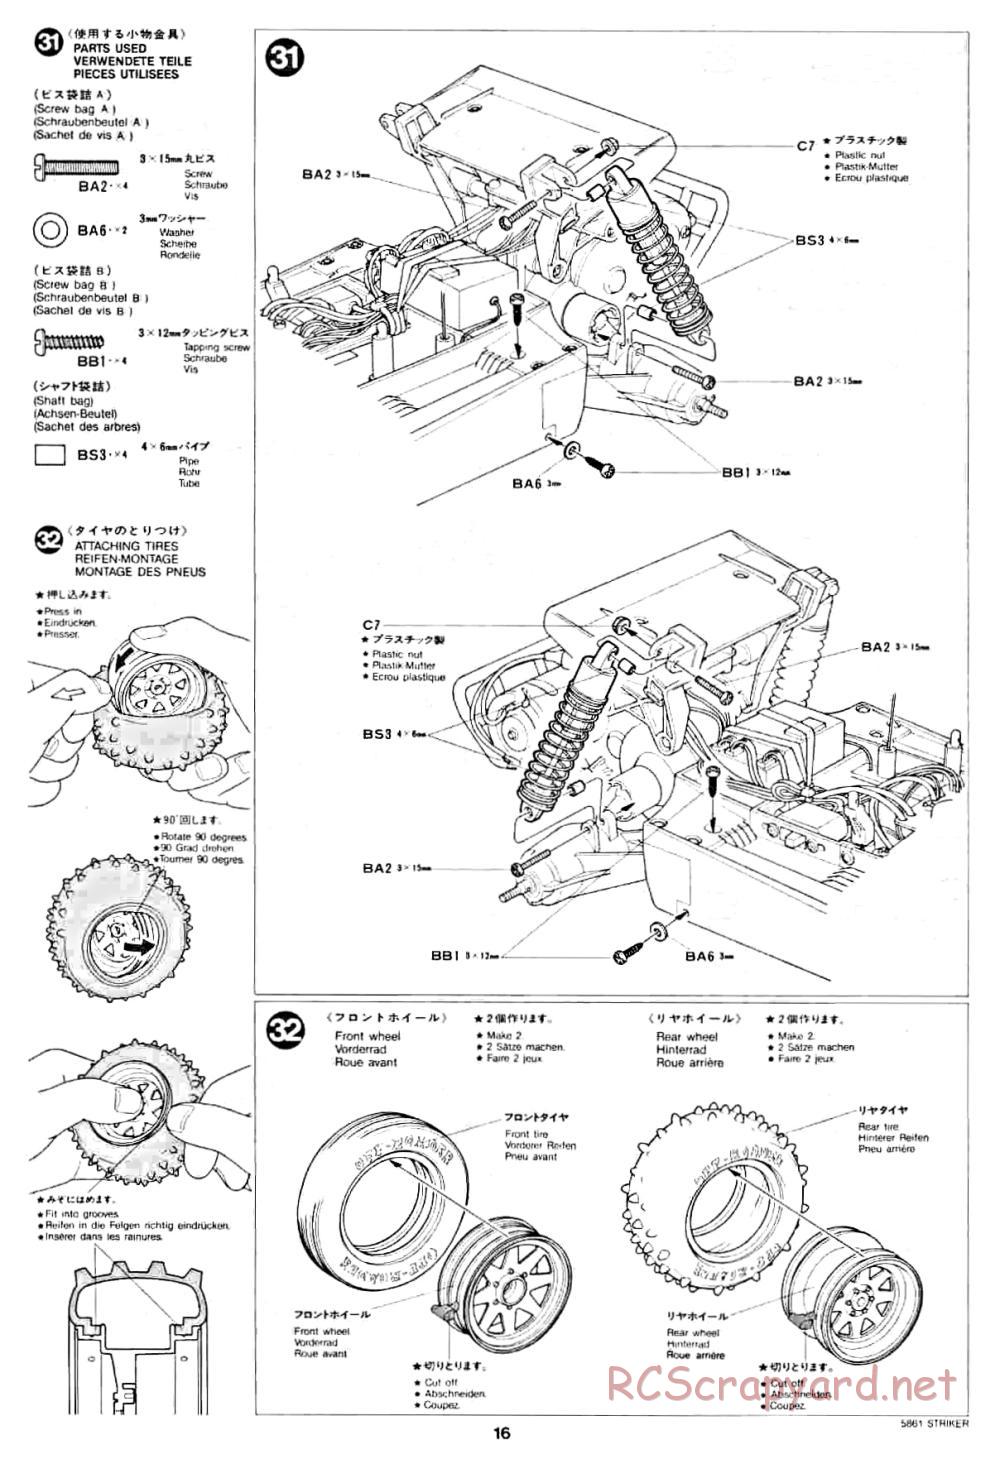 Tamiya - Striker - 58061 - Manual - Page 16